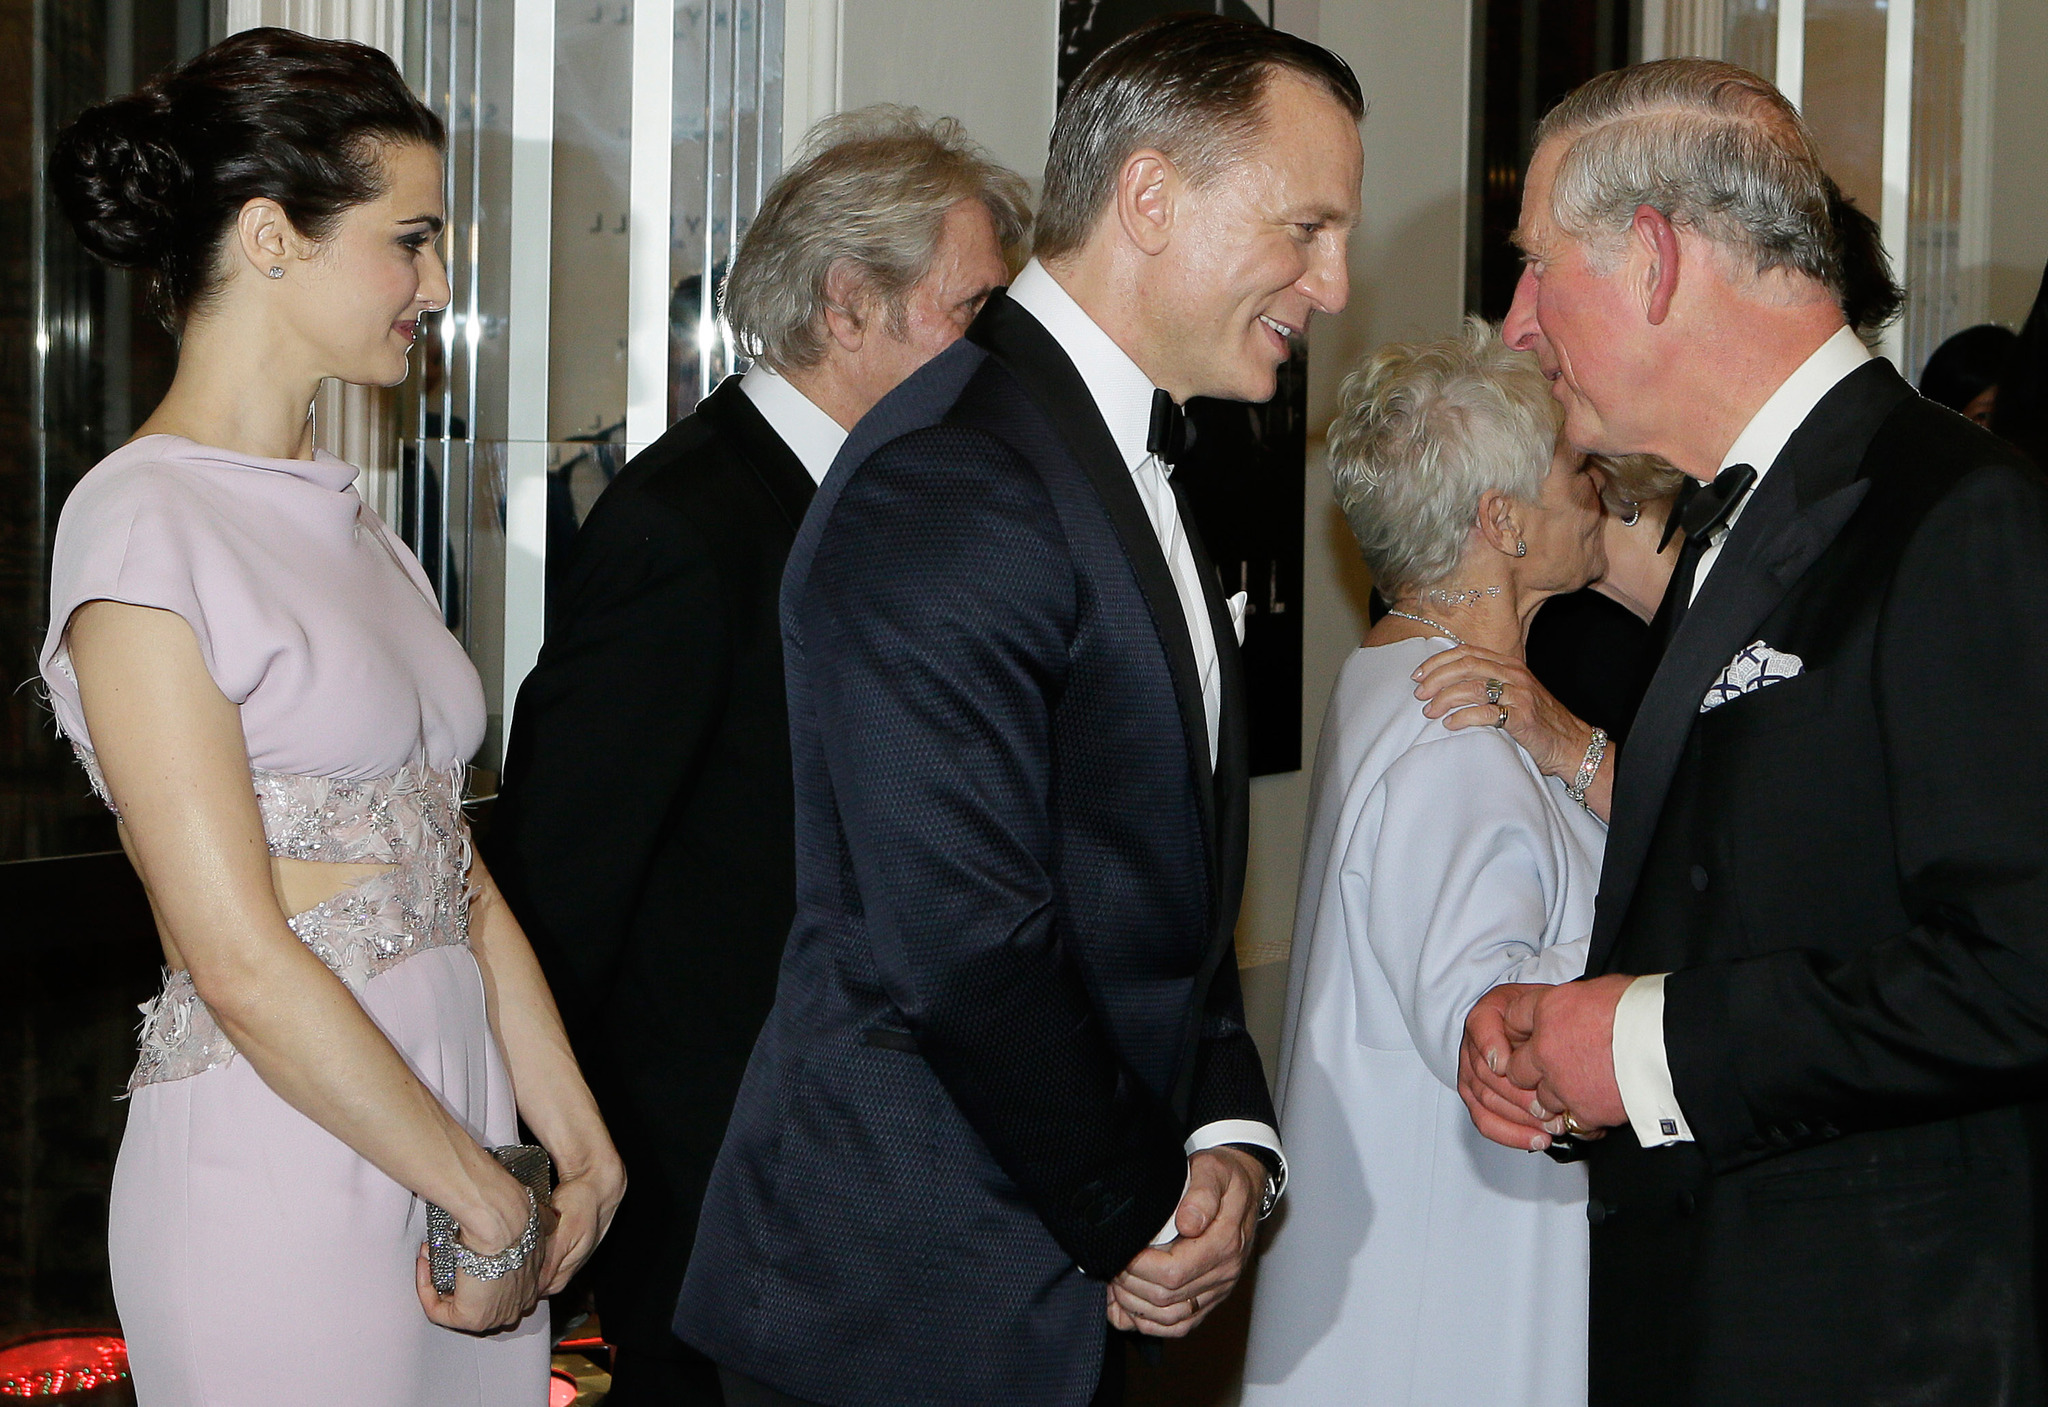 Rachel Weisz, Daniel Craig and Prince Charles at event of Operacija Skyfall (2012)